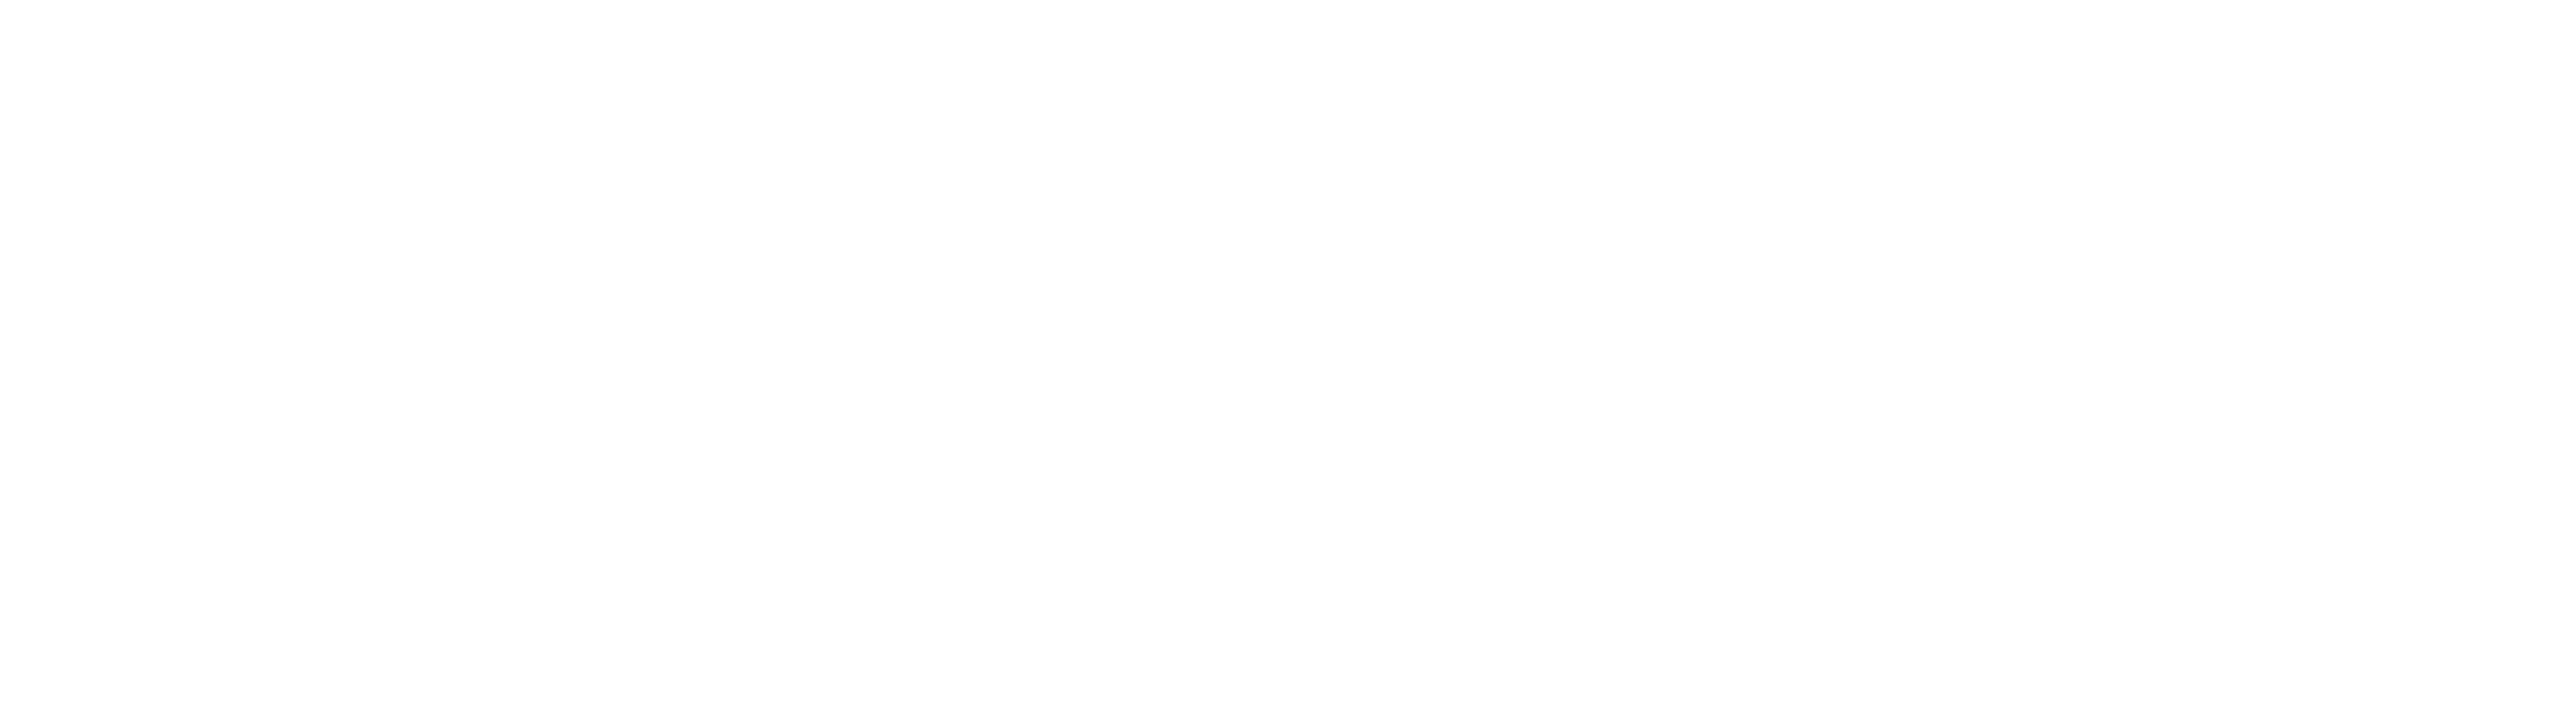 napier-financial-white-logo